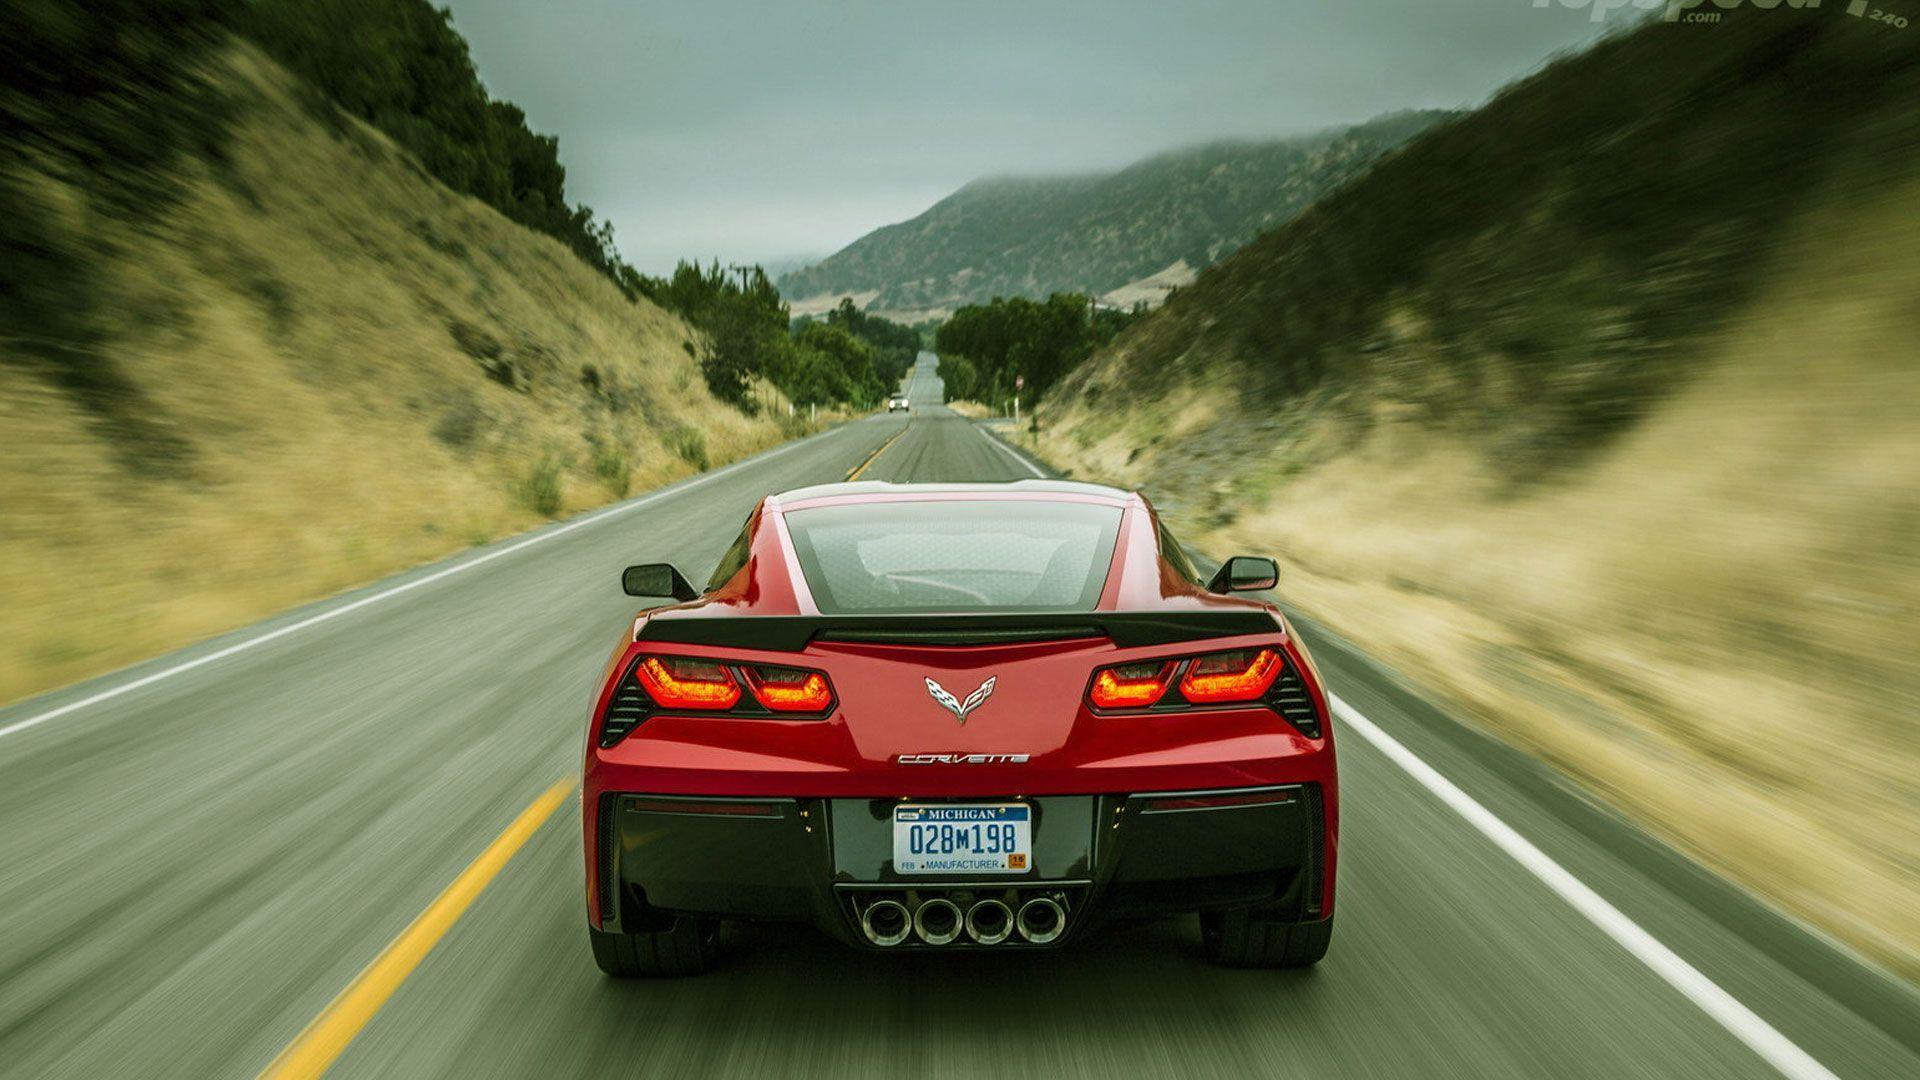 Image Gallery Corvette Background